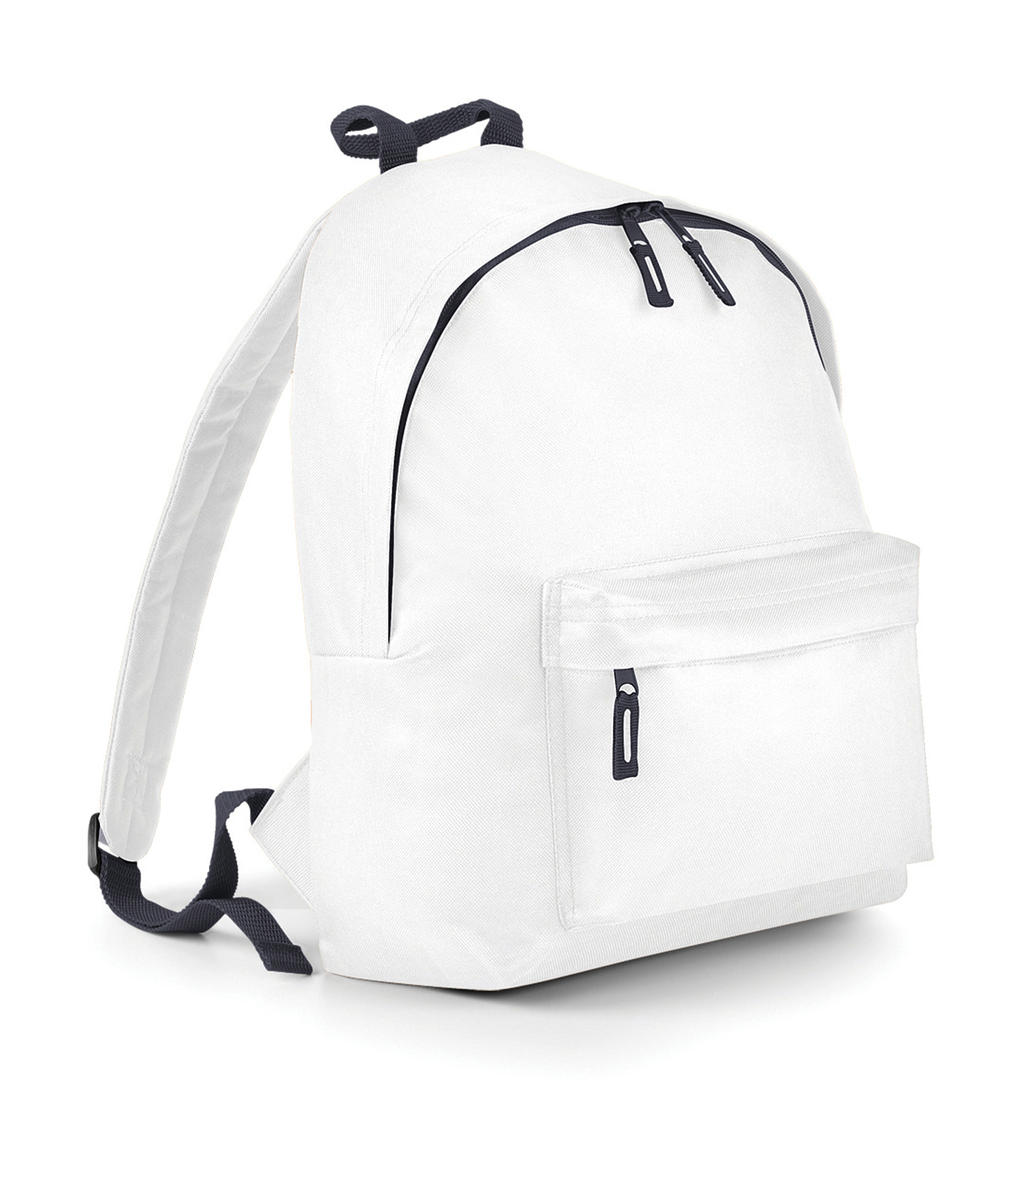  Junior Fashion Backpack in Farbe White/Graphite Grey